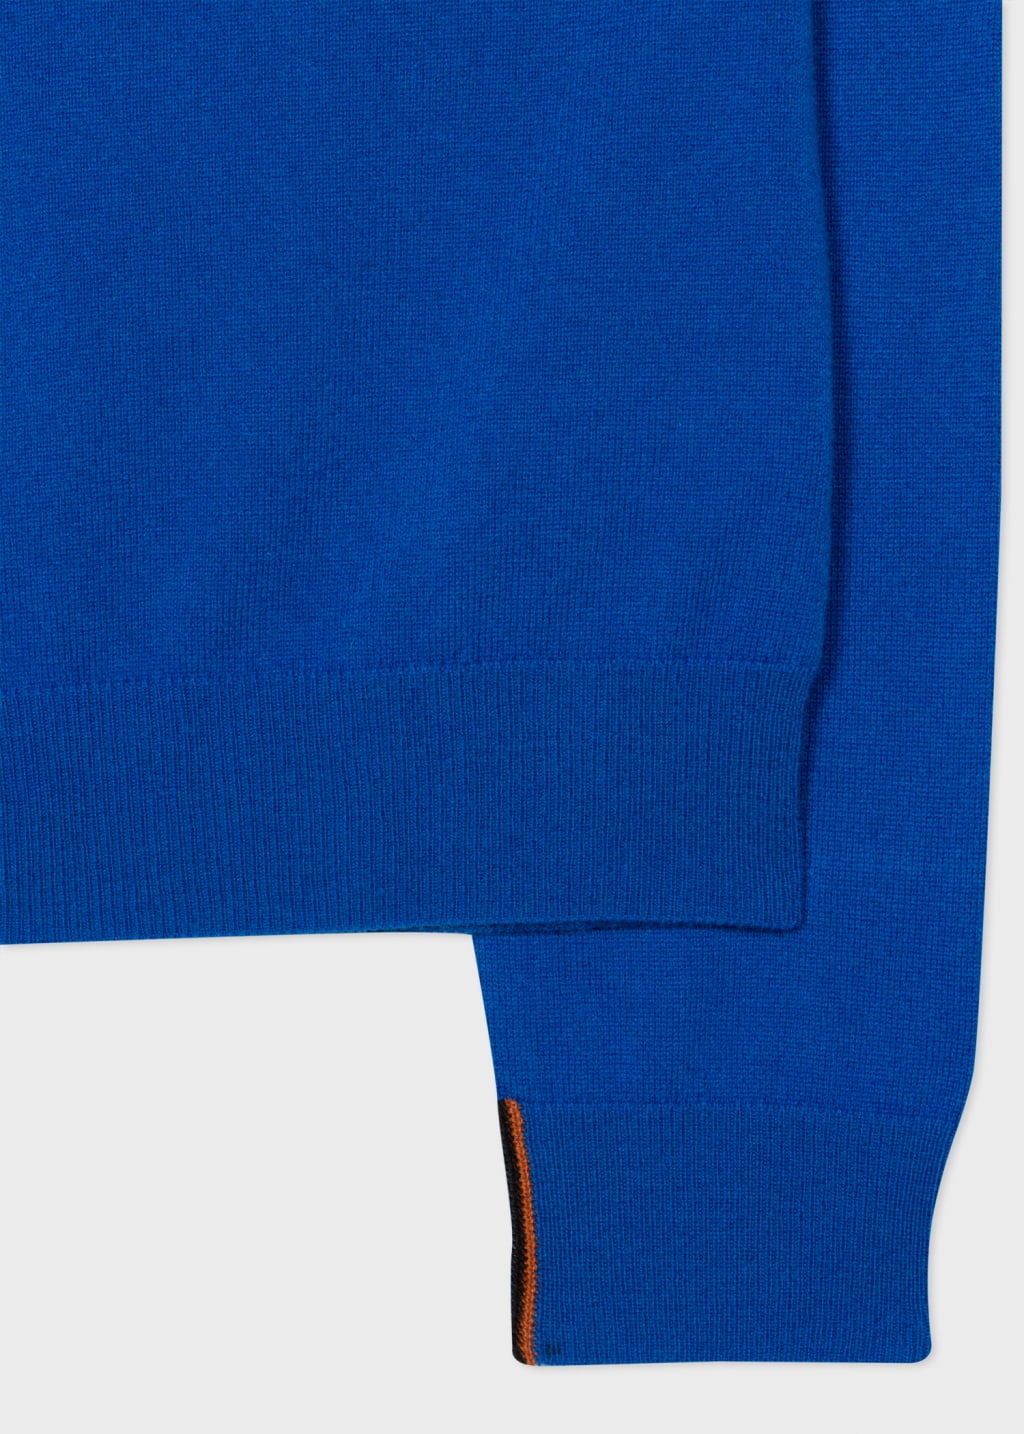 Detail View - Cobalt Blue Cashmere Zip Up Cardigan Paul Smith